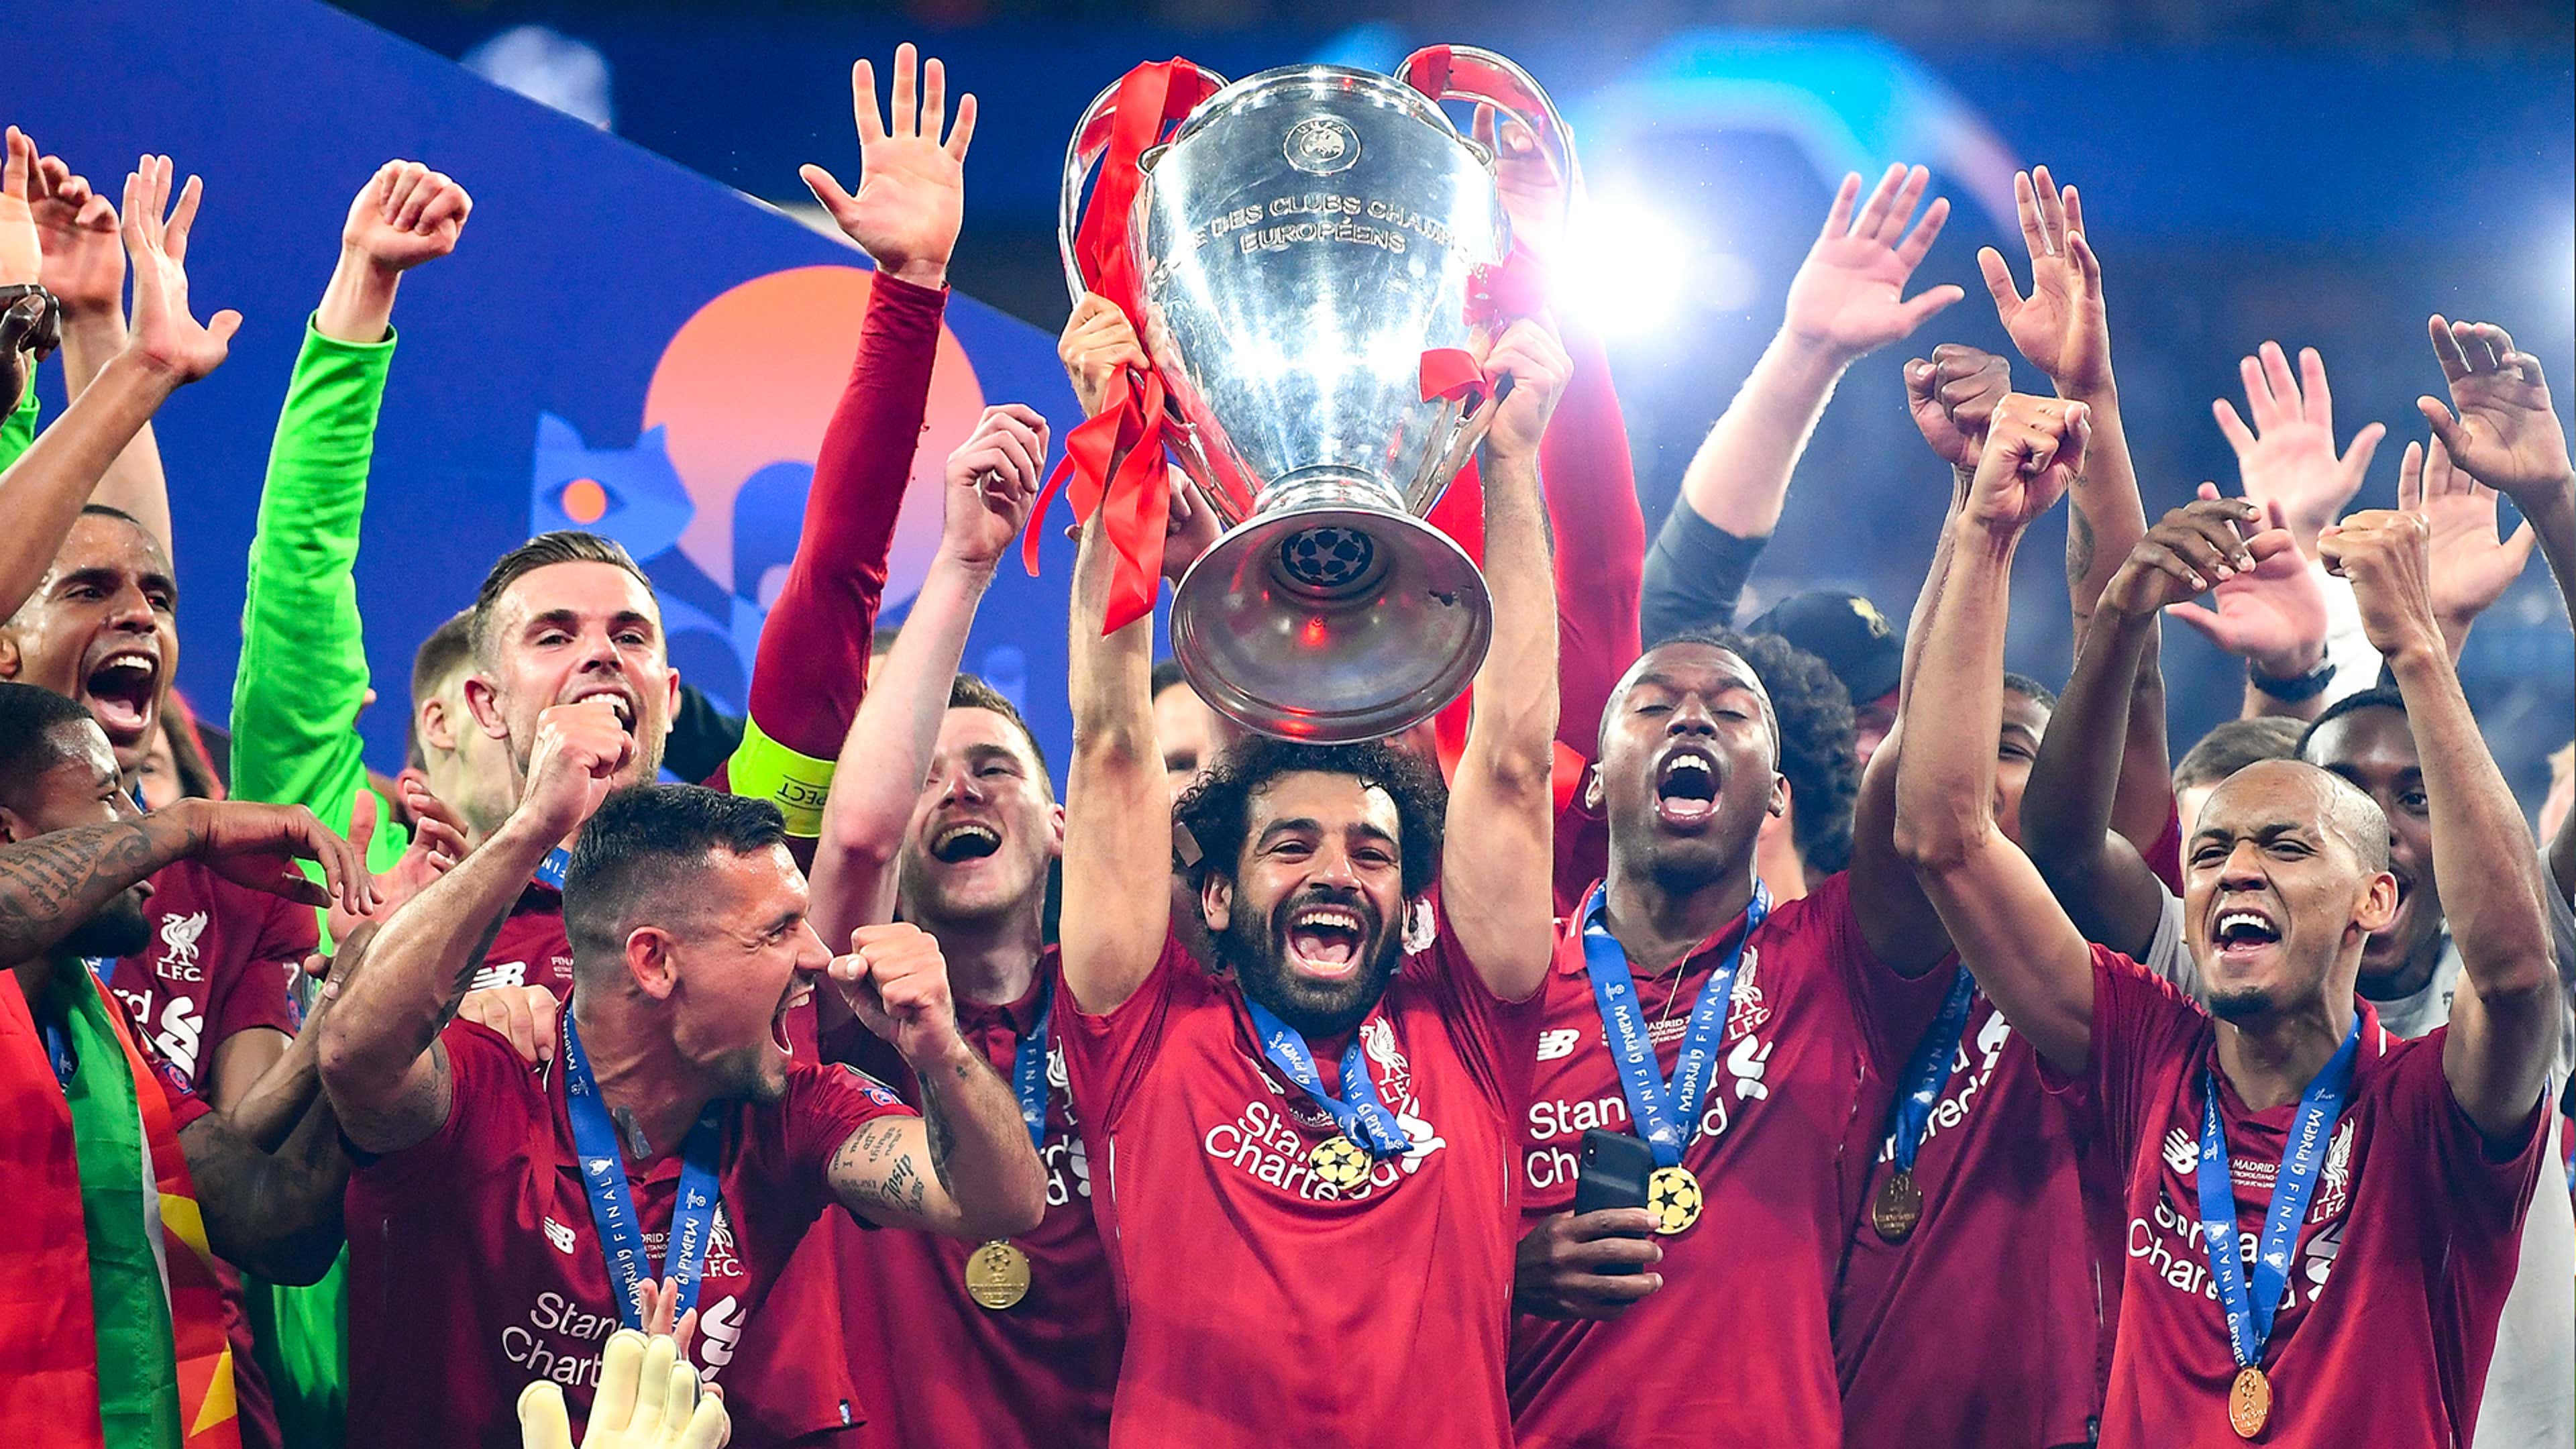 UEFA Champions League 2018-19 Winners Liverpool